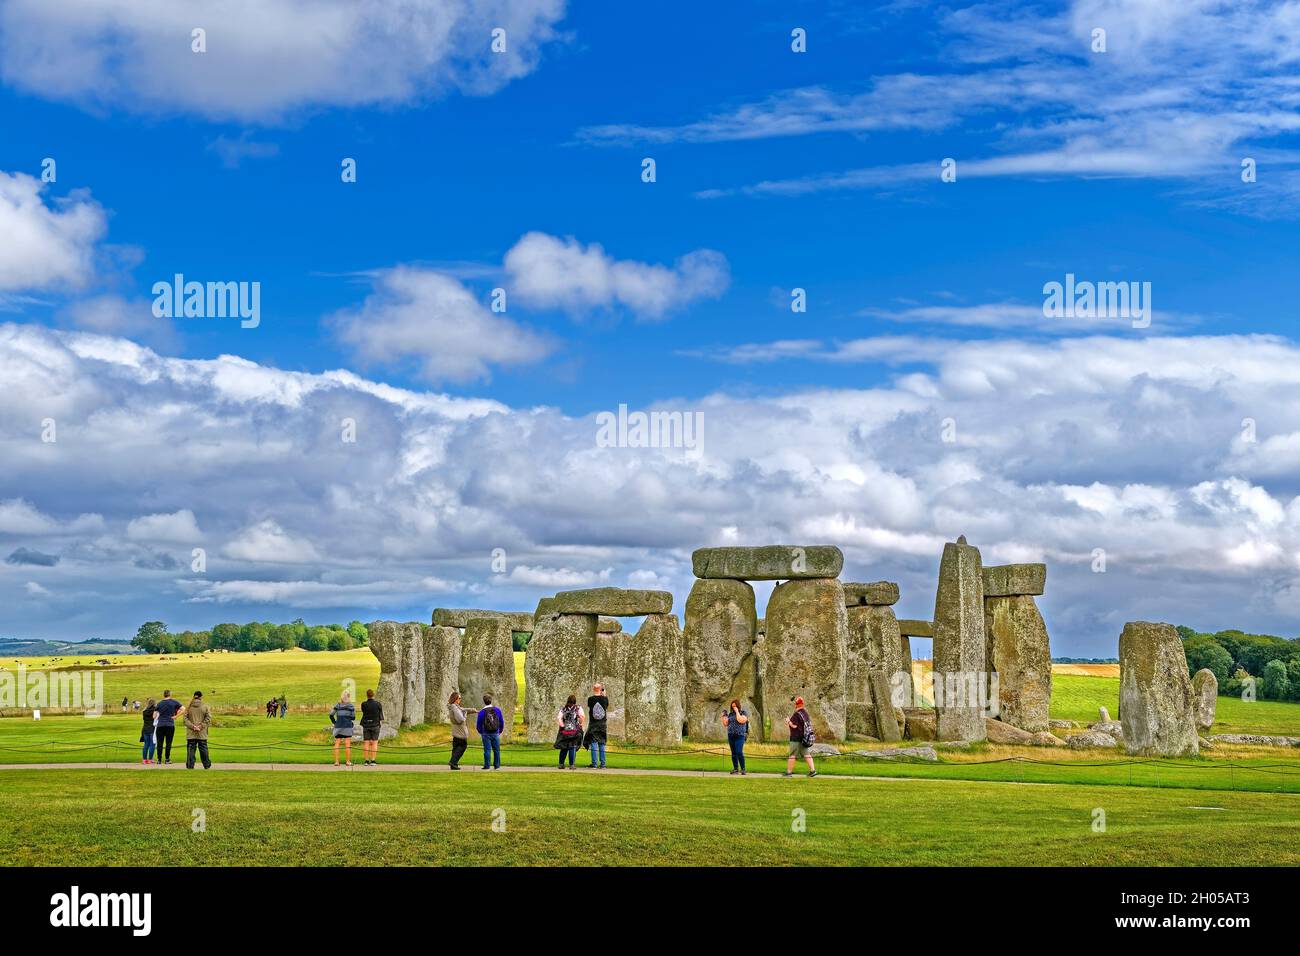 Stonehenge Stone Circle on Salisbury Plain near Amesbury in Wiltshire, England. Stock Photo